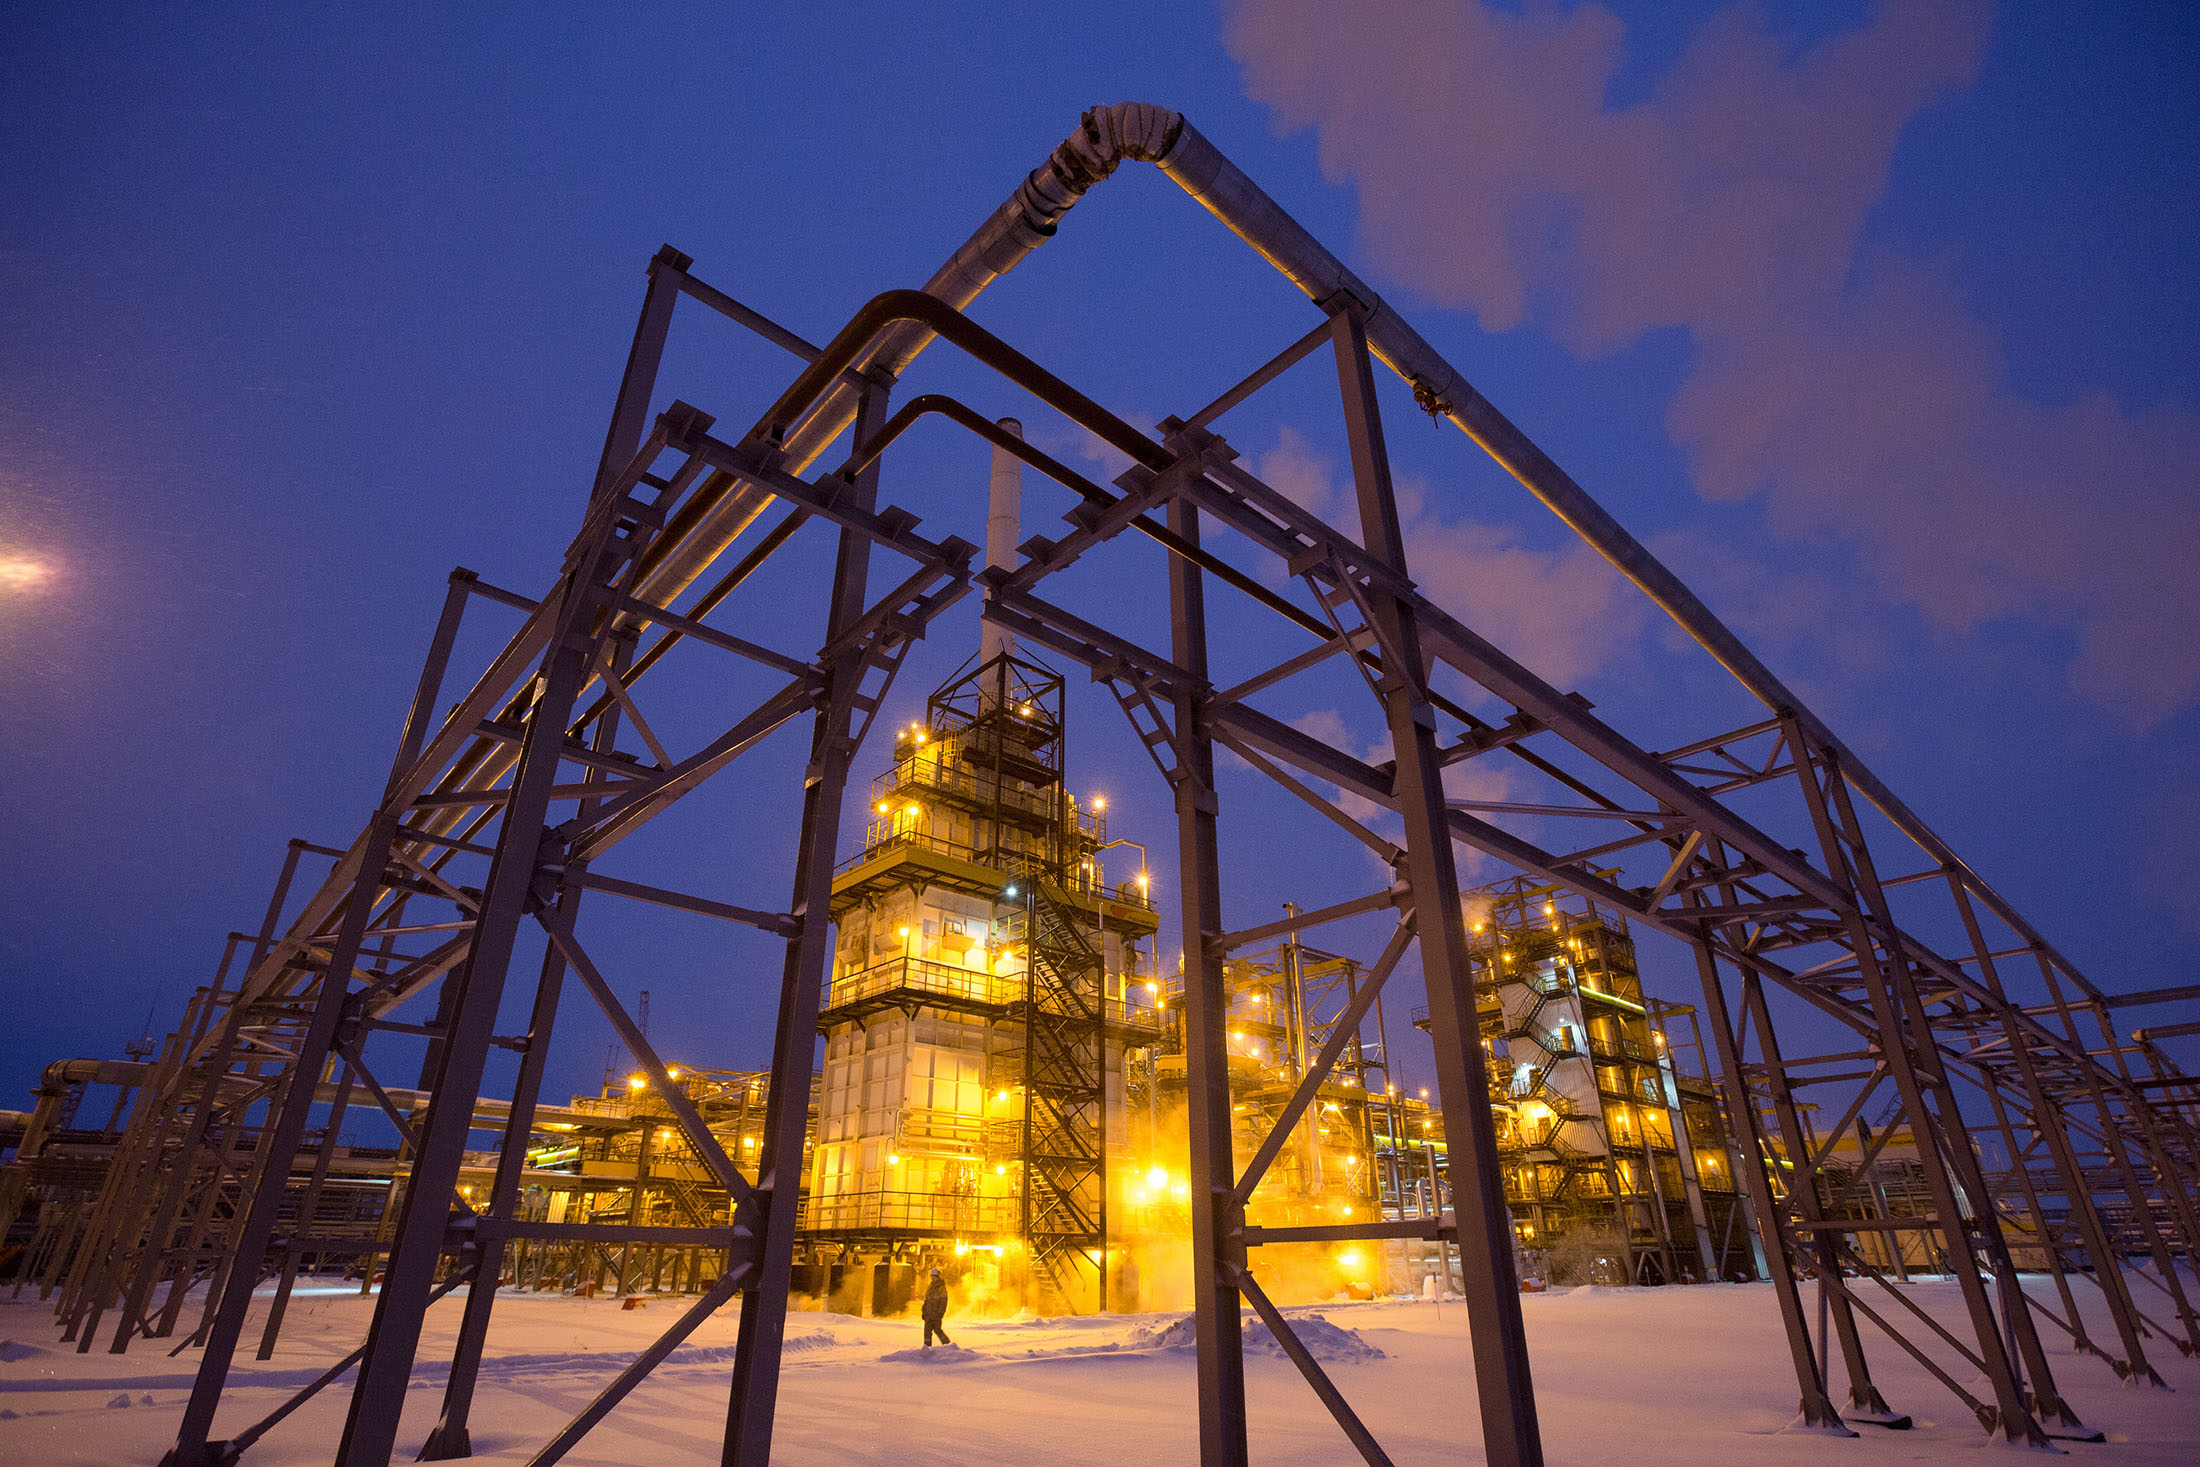 Lights illuminate the low-temperature isomerization unit at the Novokuibyshevsk oil refinery plant, operated by Rosneft PJSC, in Novokuibyshevsk, Samara region, Russia, on Wednesday, Dec. 21, 2016.